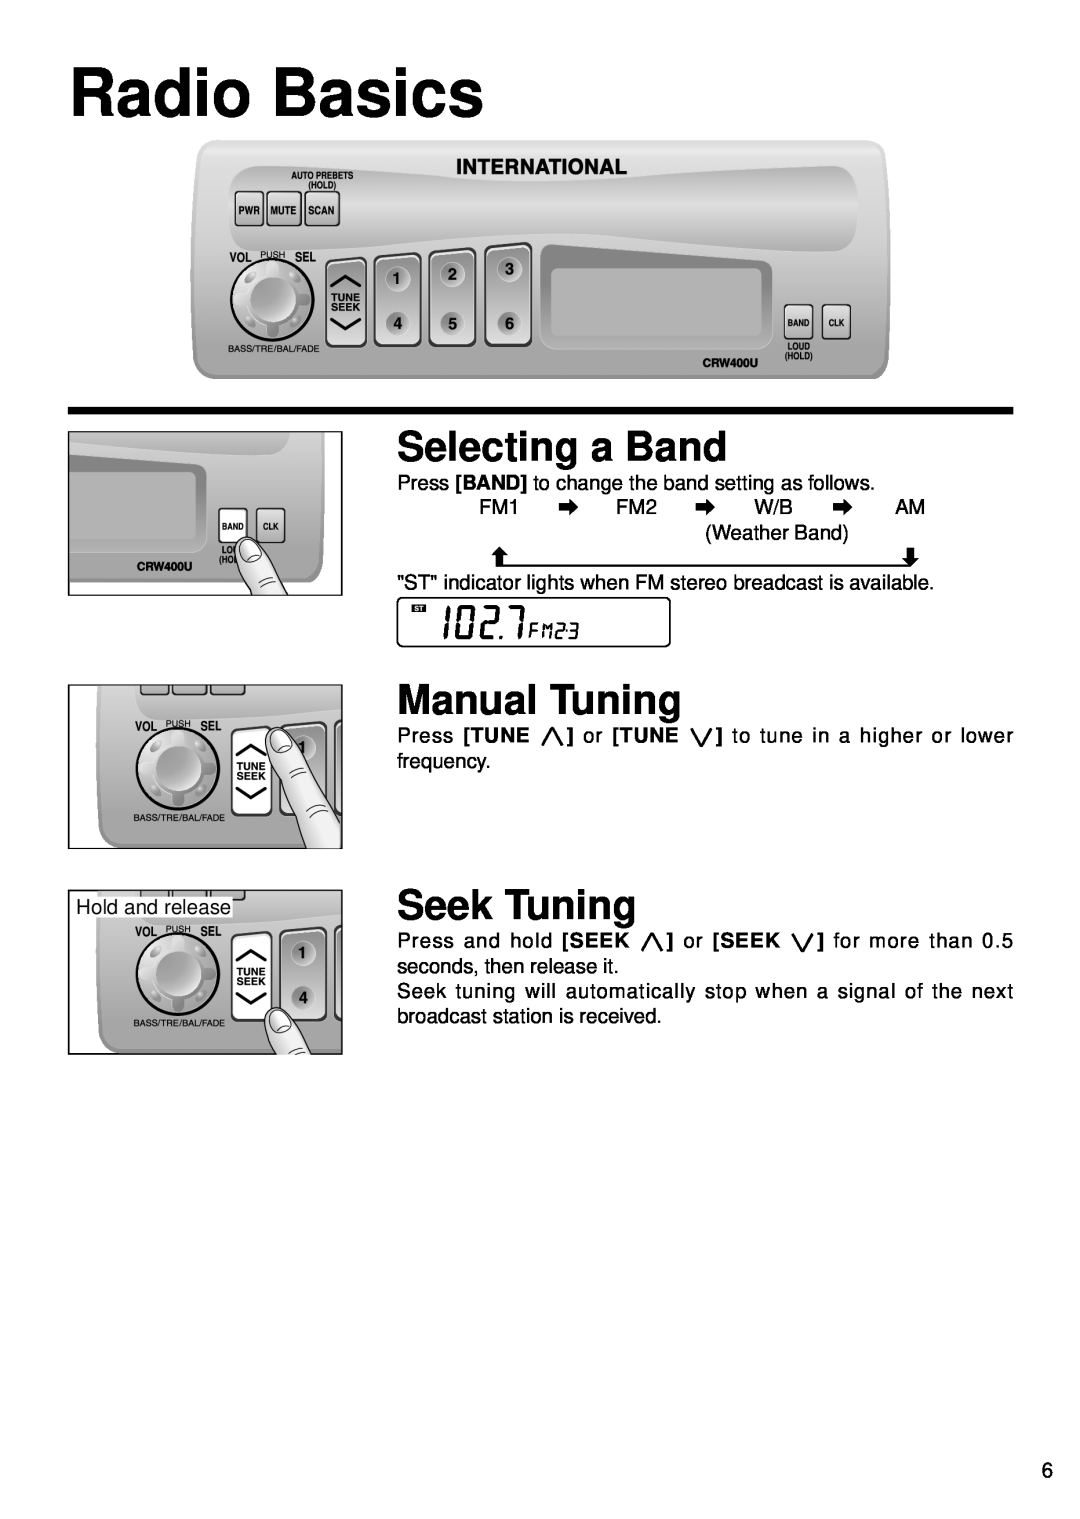 Panasonic CR-W400U operating instructions Radio Basics, Selecting a Band, Manual Tuning, Seek Tuning 